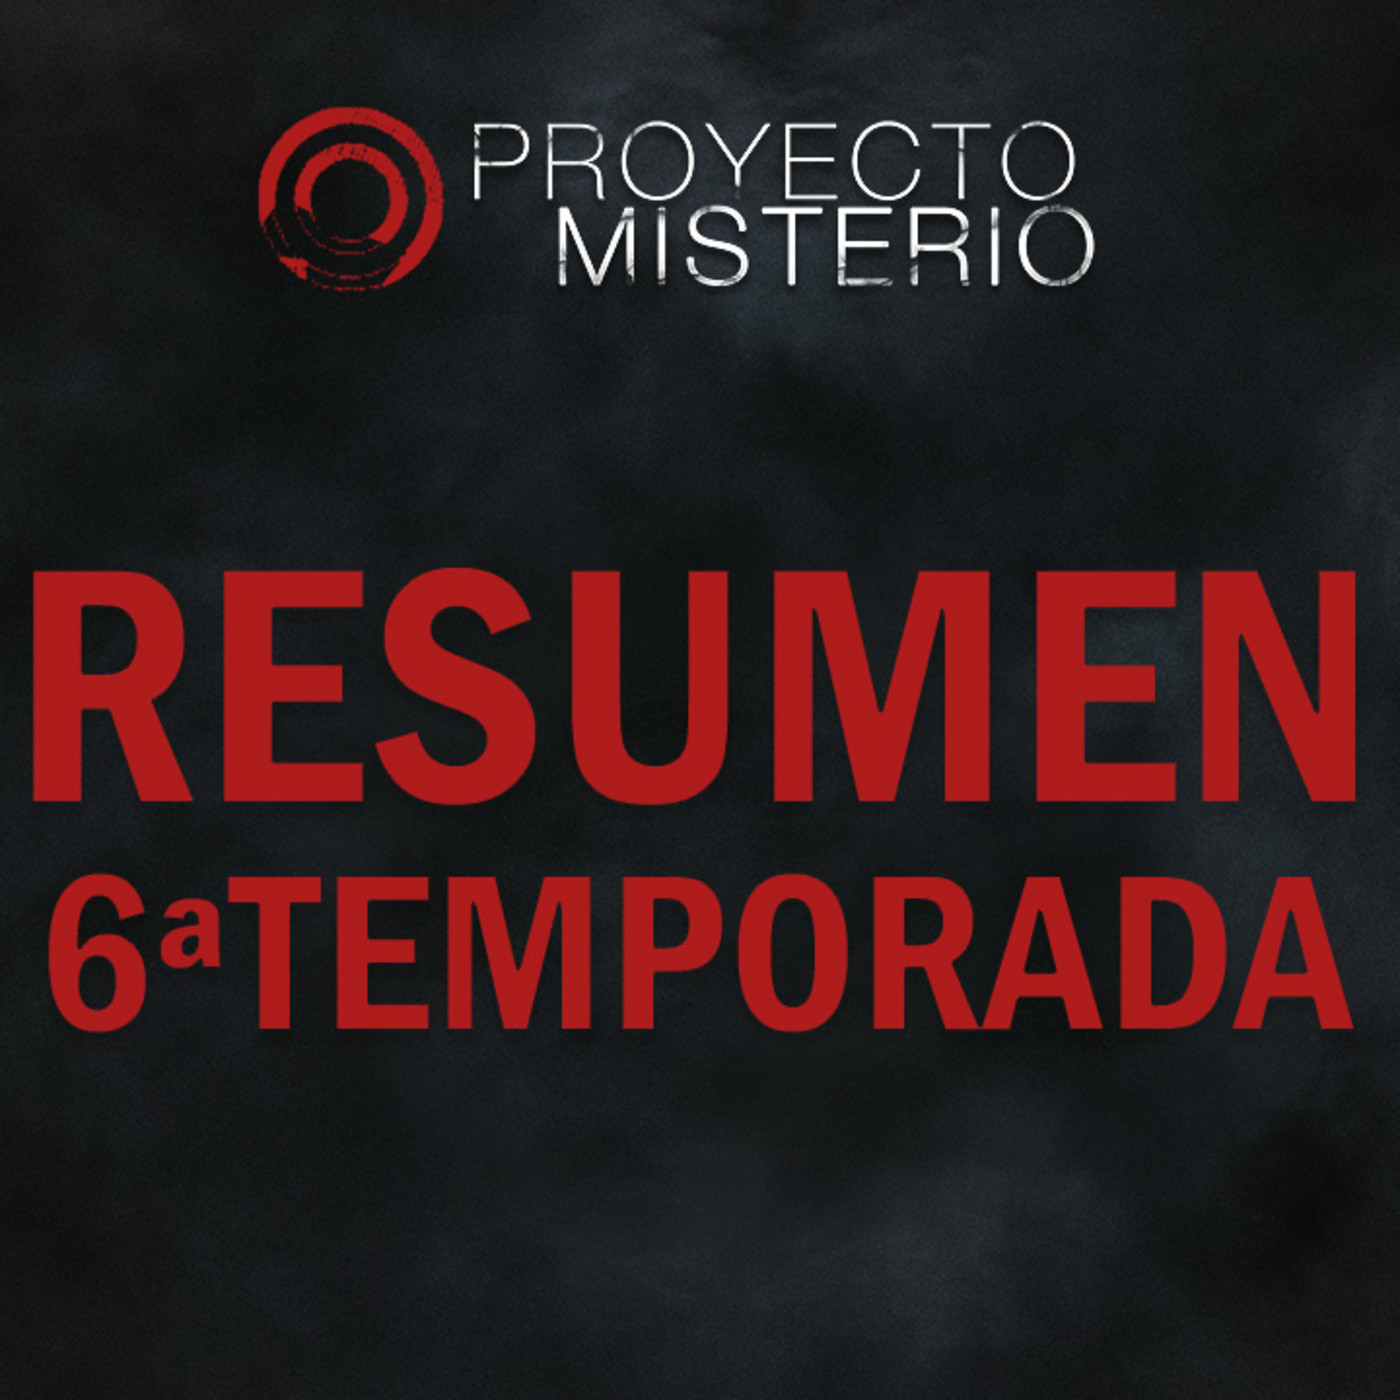 Proyecto Misterio: Resumen sexta temporada